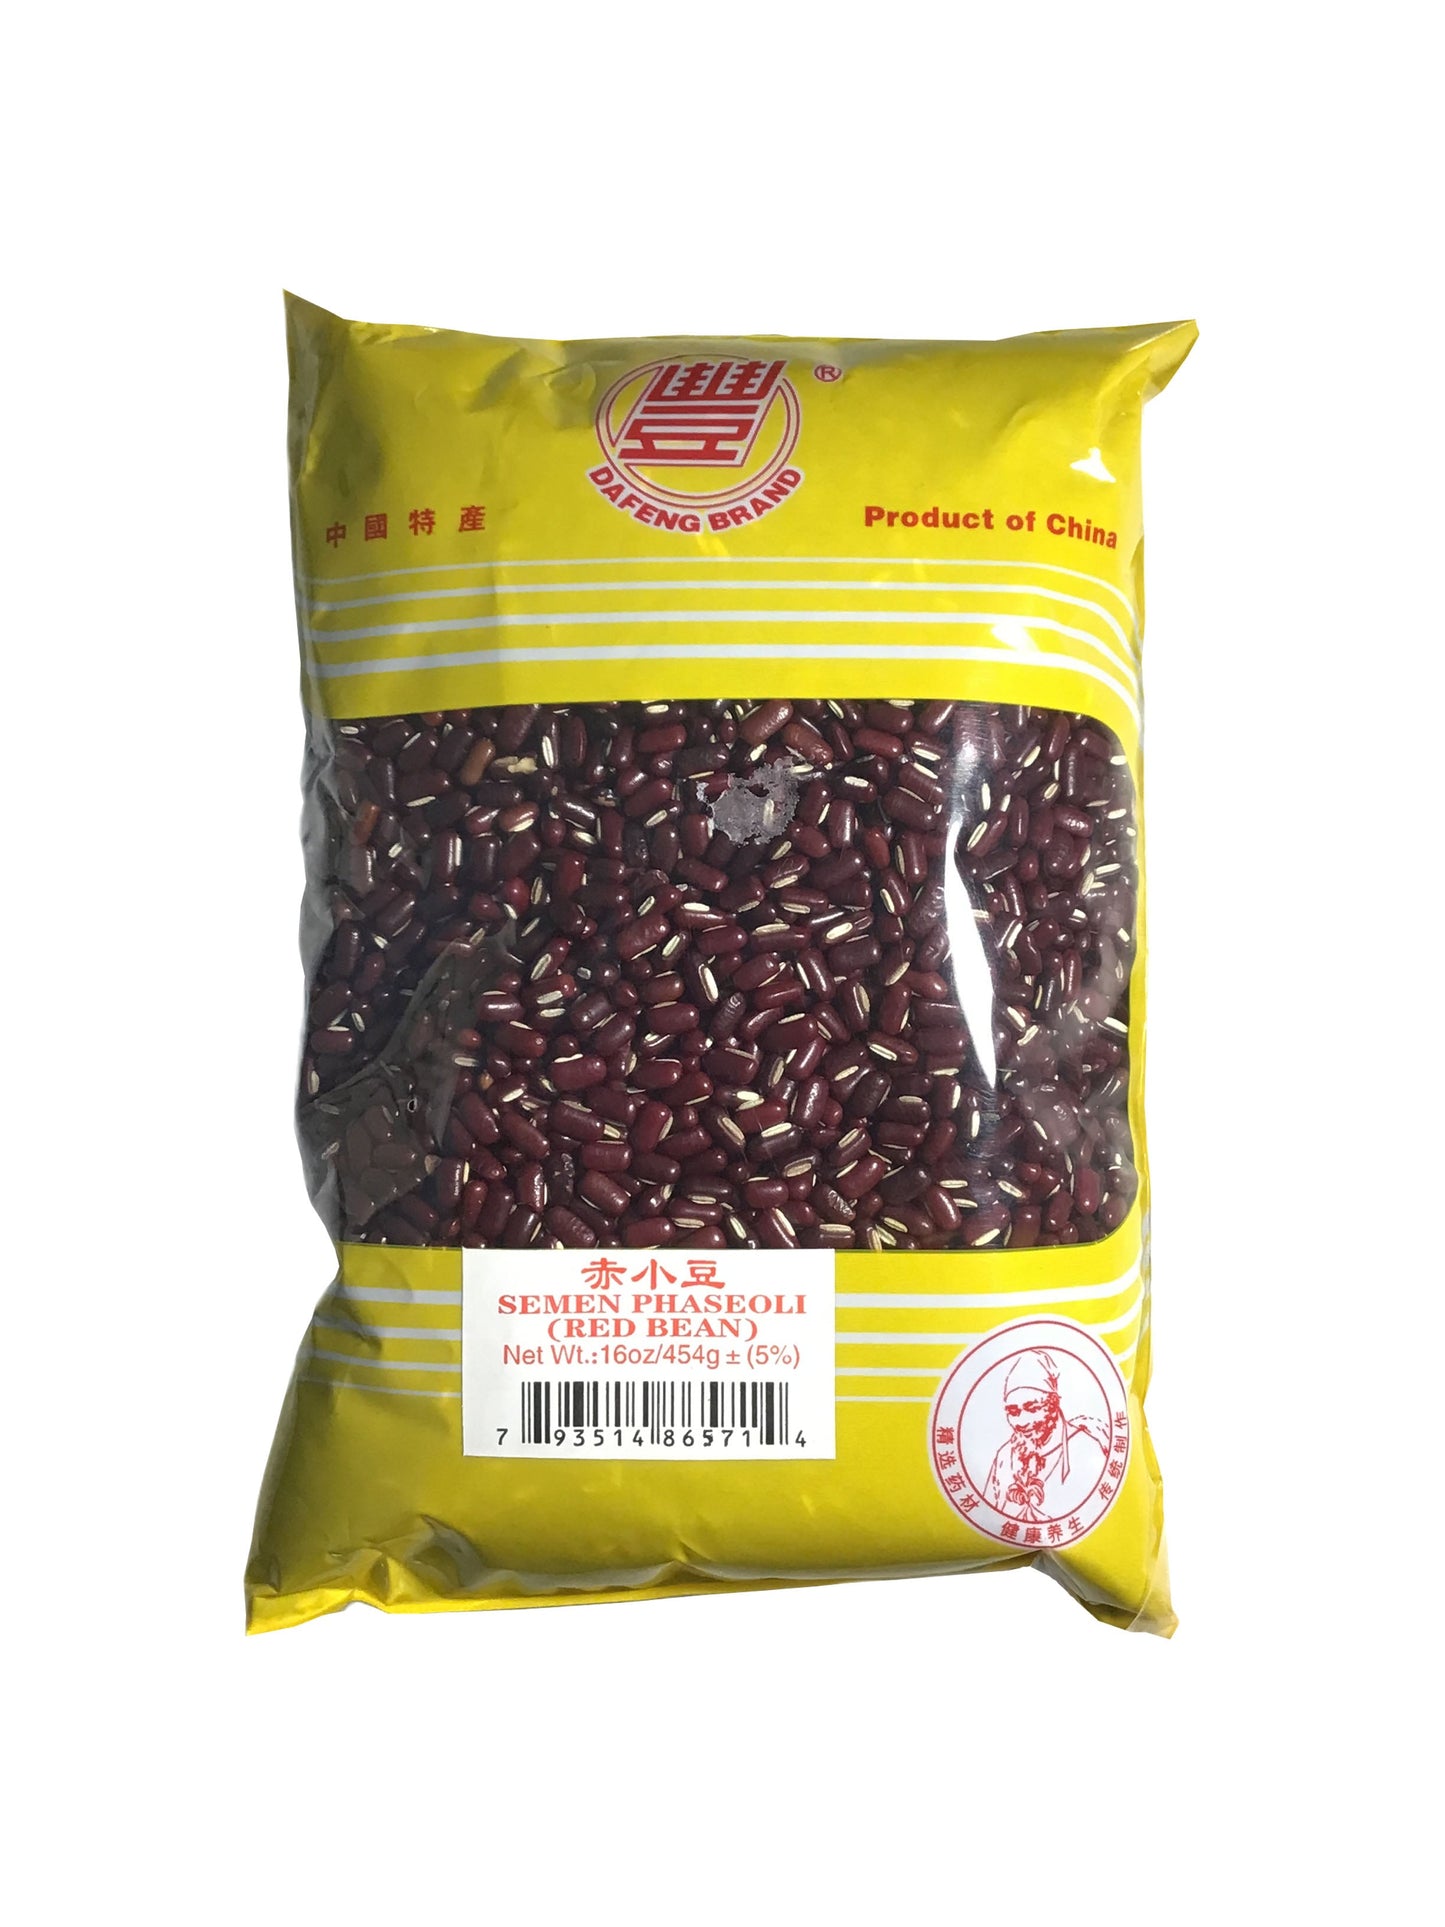 Aduki Bean/ Red Ricebean (Semen Phaseoli) - 赤小豆 (chì xiǎo dòu)